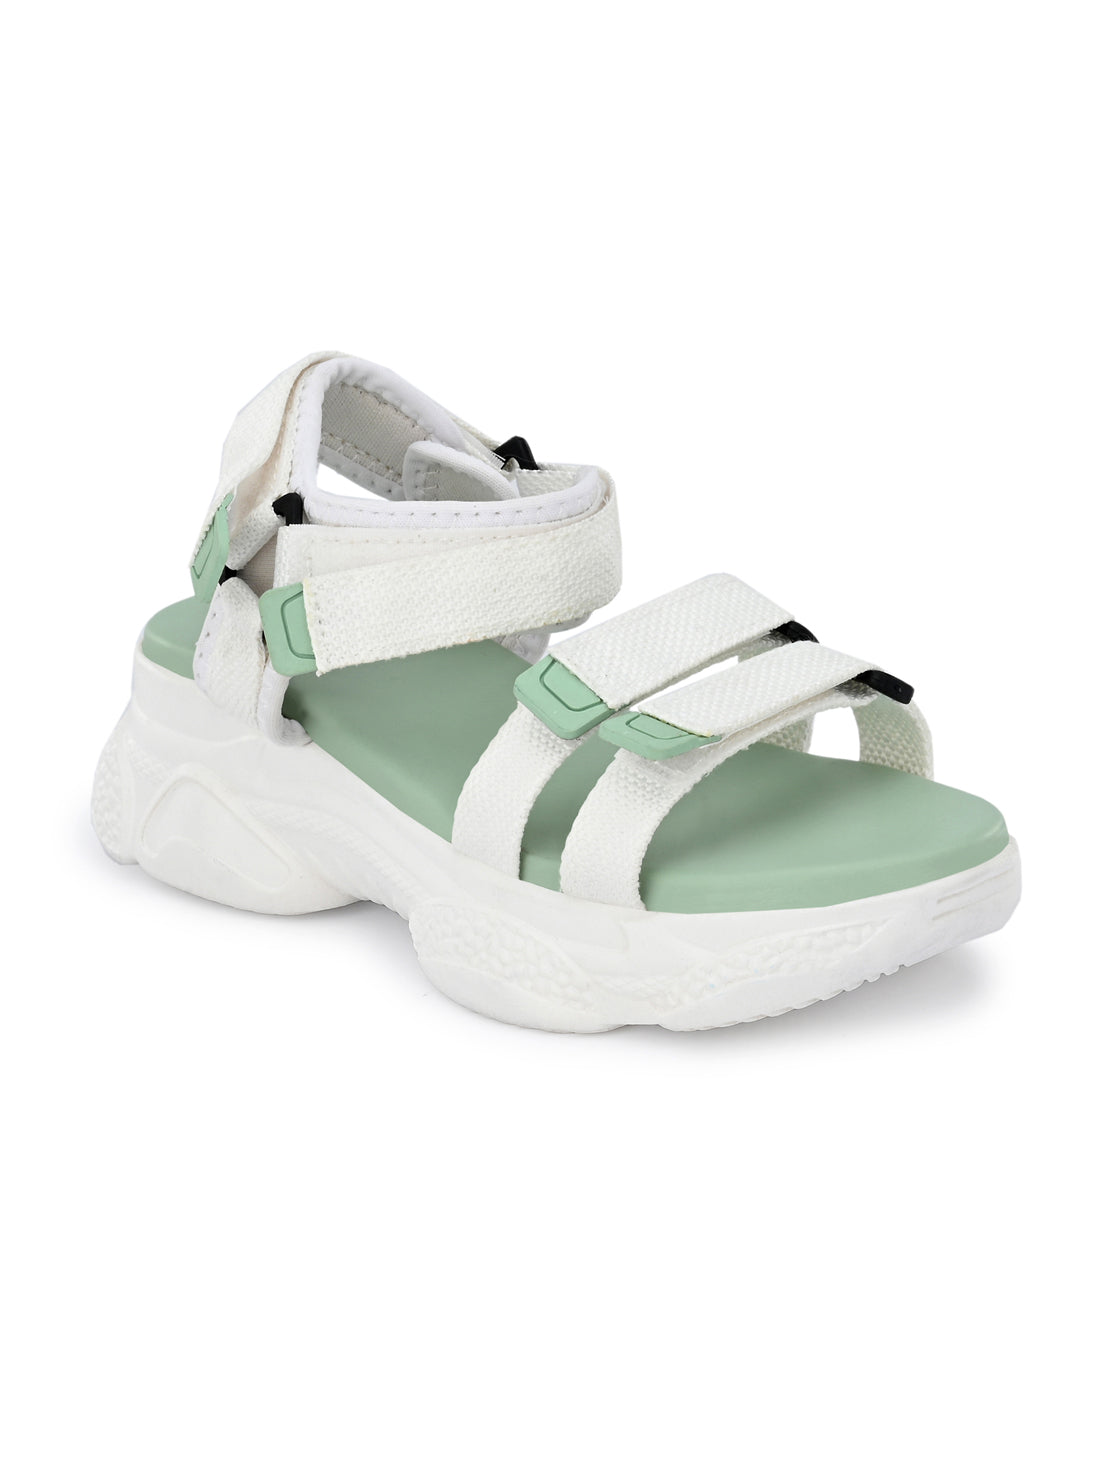 Hirolas® Women White/SeaGreen Fabric Sports _Sandals (HROWSL02SGW)